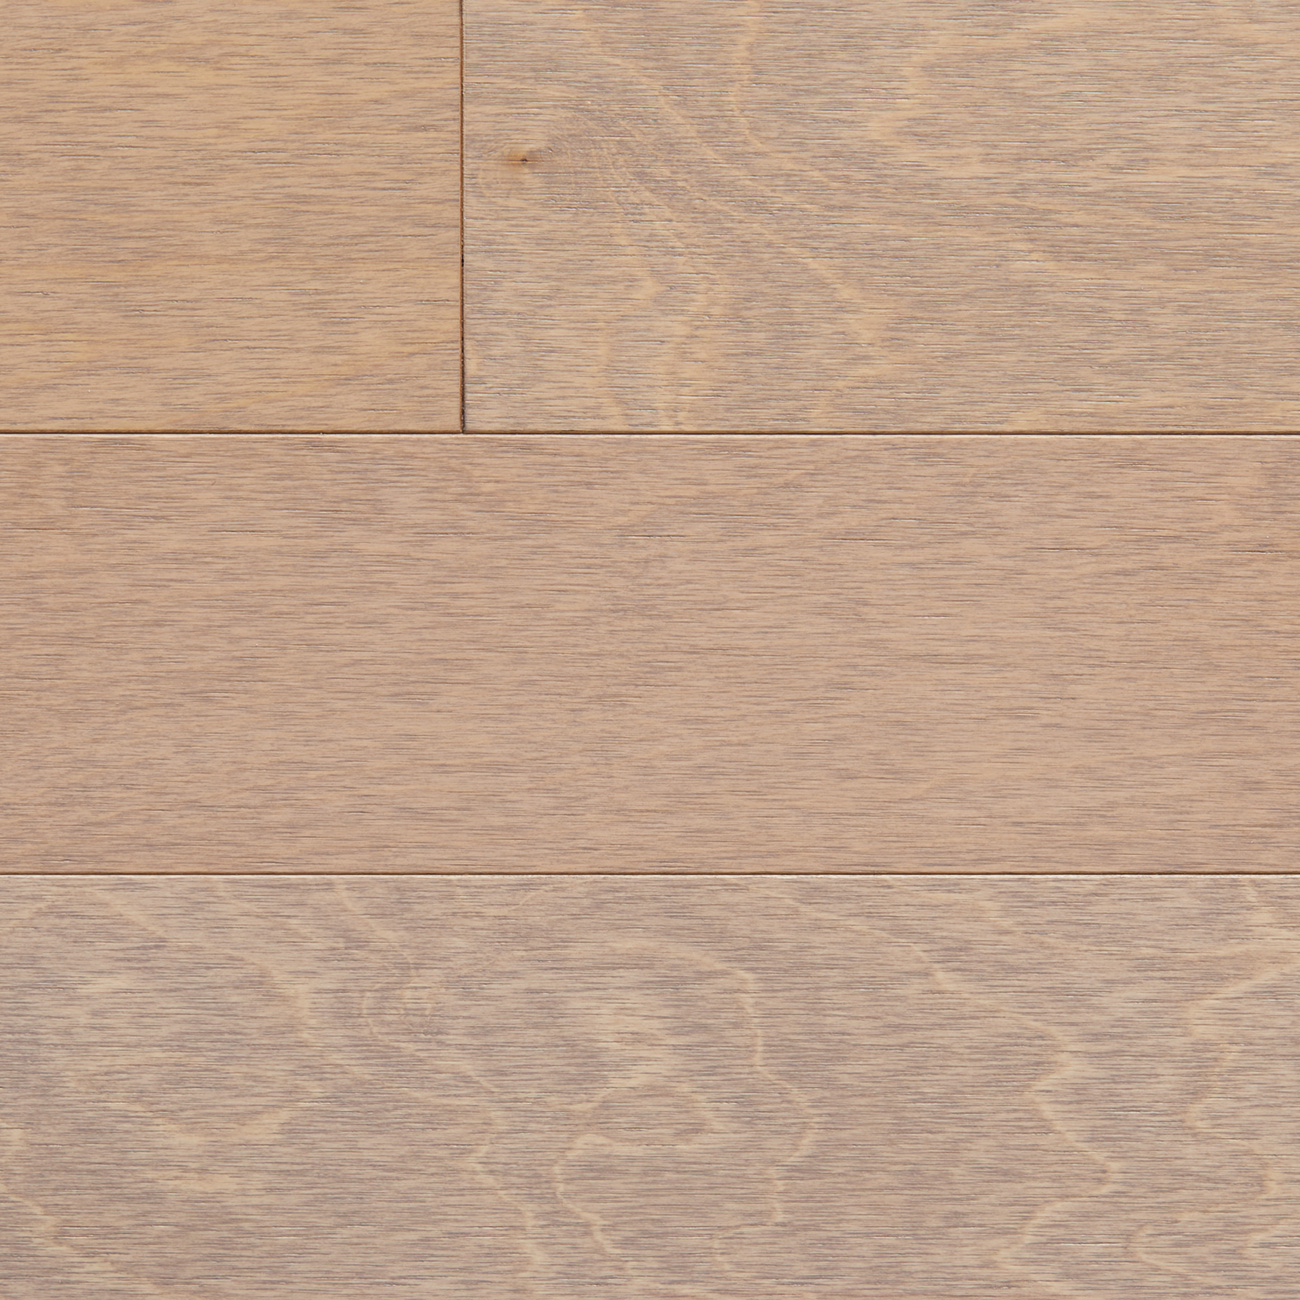 Birch Linen Husky Plank, Husky Hardwood Flooring